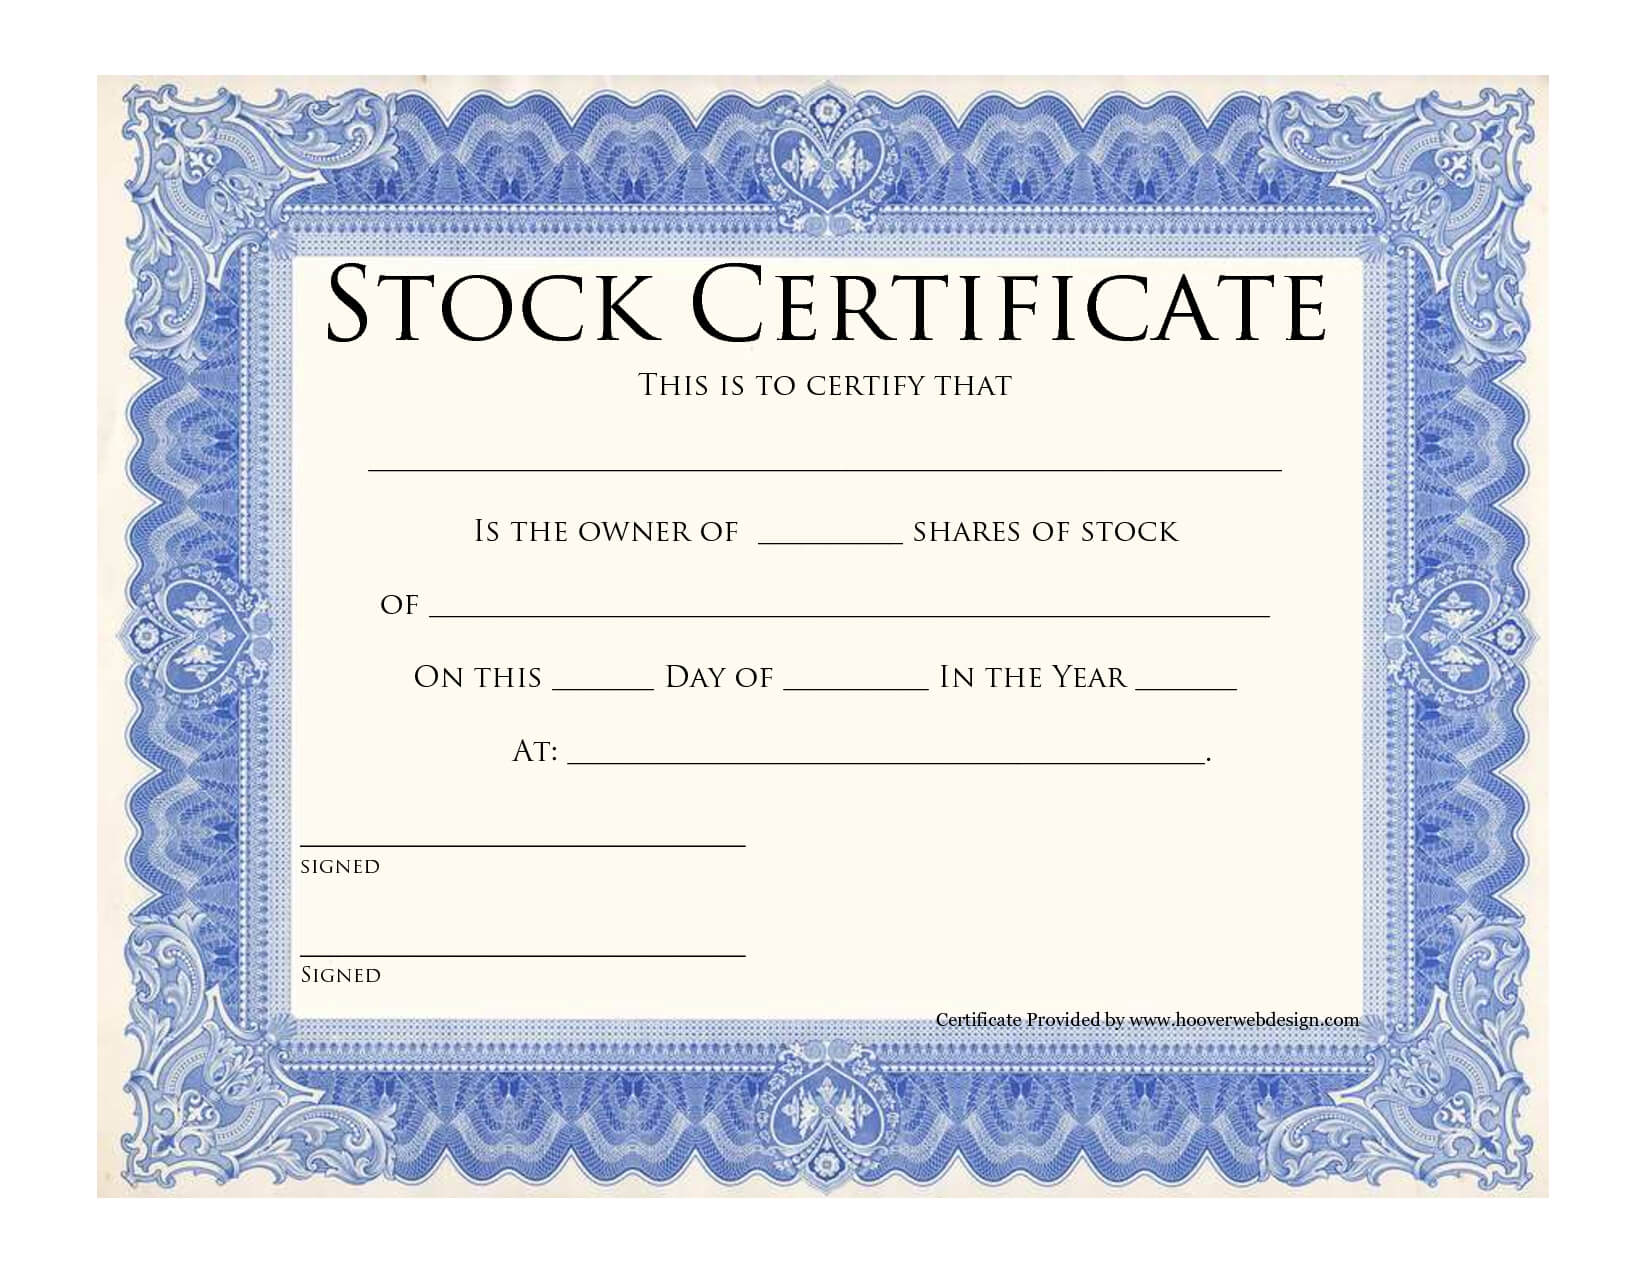 Blank Stock Certificate Template | Printable Stock Within Corporate Bond Certificate Template